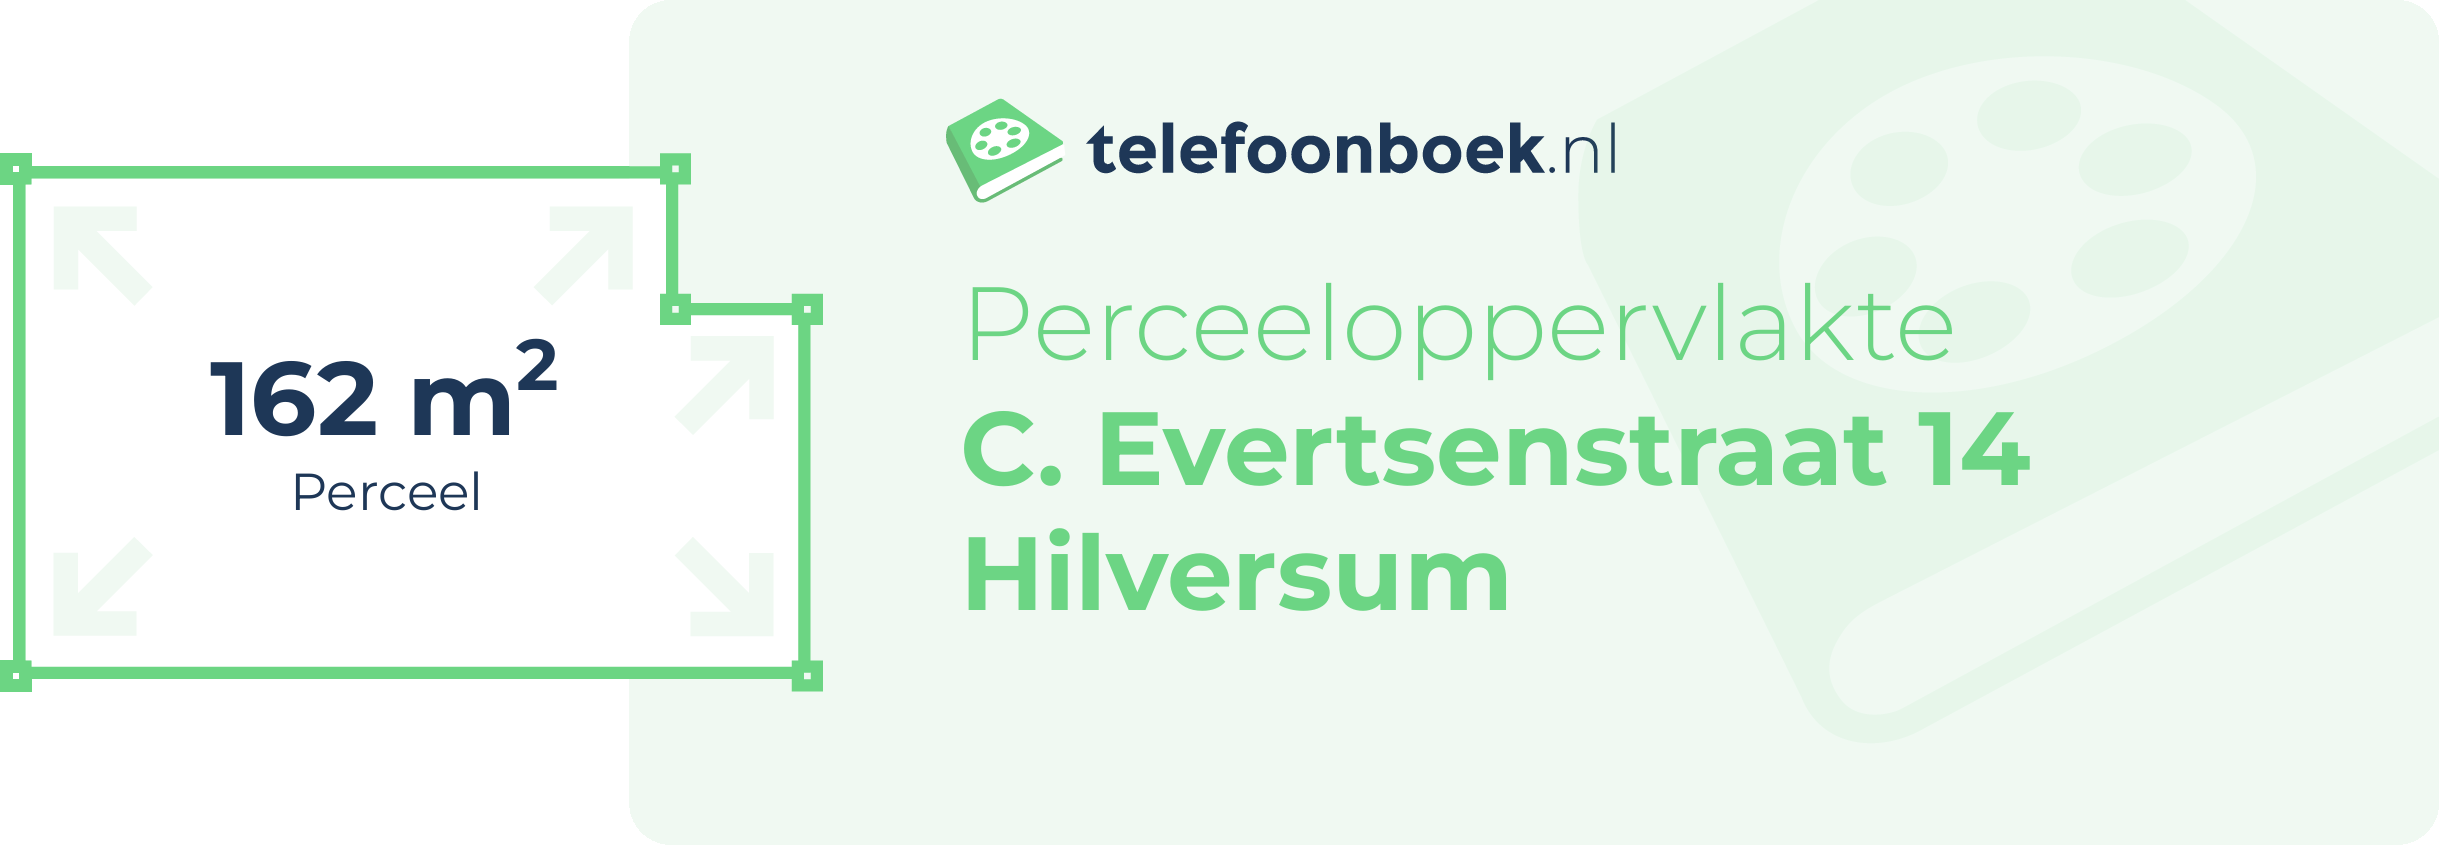 Perceeloppervlakte C. Evertsenstraat 14 Hilversum